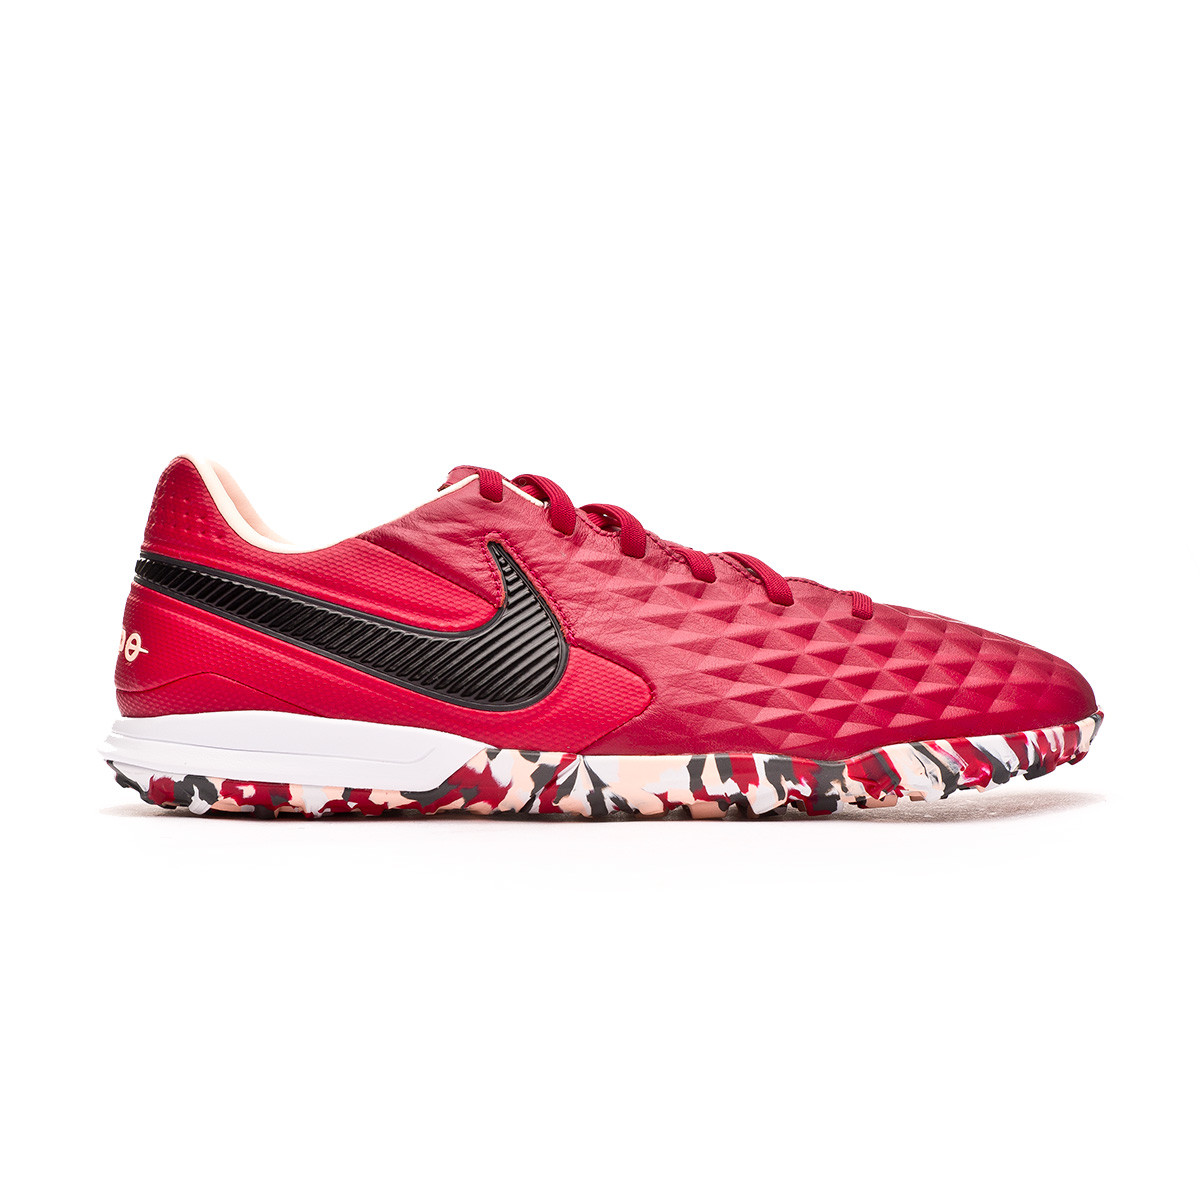 Tenis Nike Tiempo Legend VIII Pro Turf Cardinal red-Black-Crimson  tint-White-Iron gr - Tienda de fútbol Fútbol Emotion